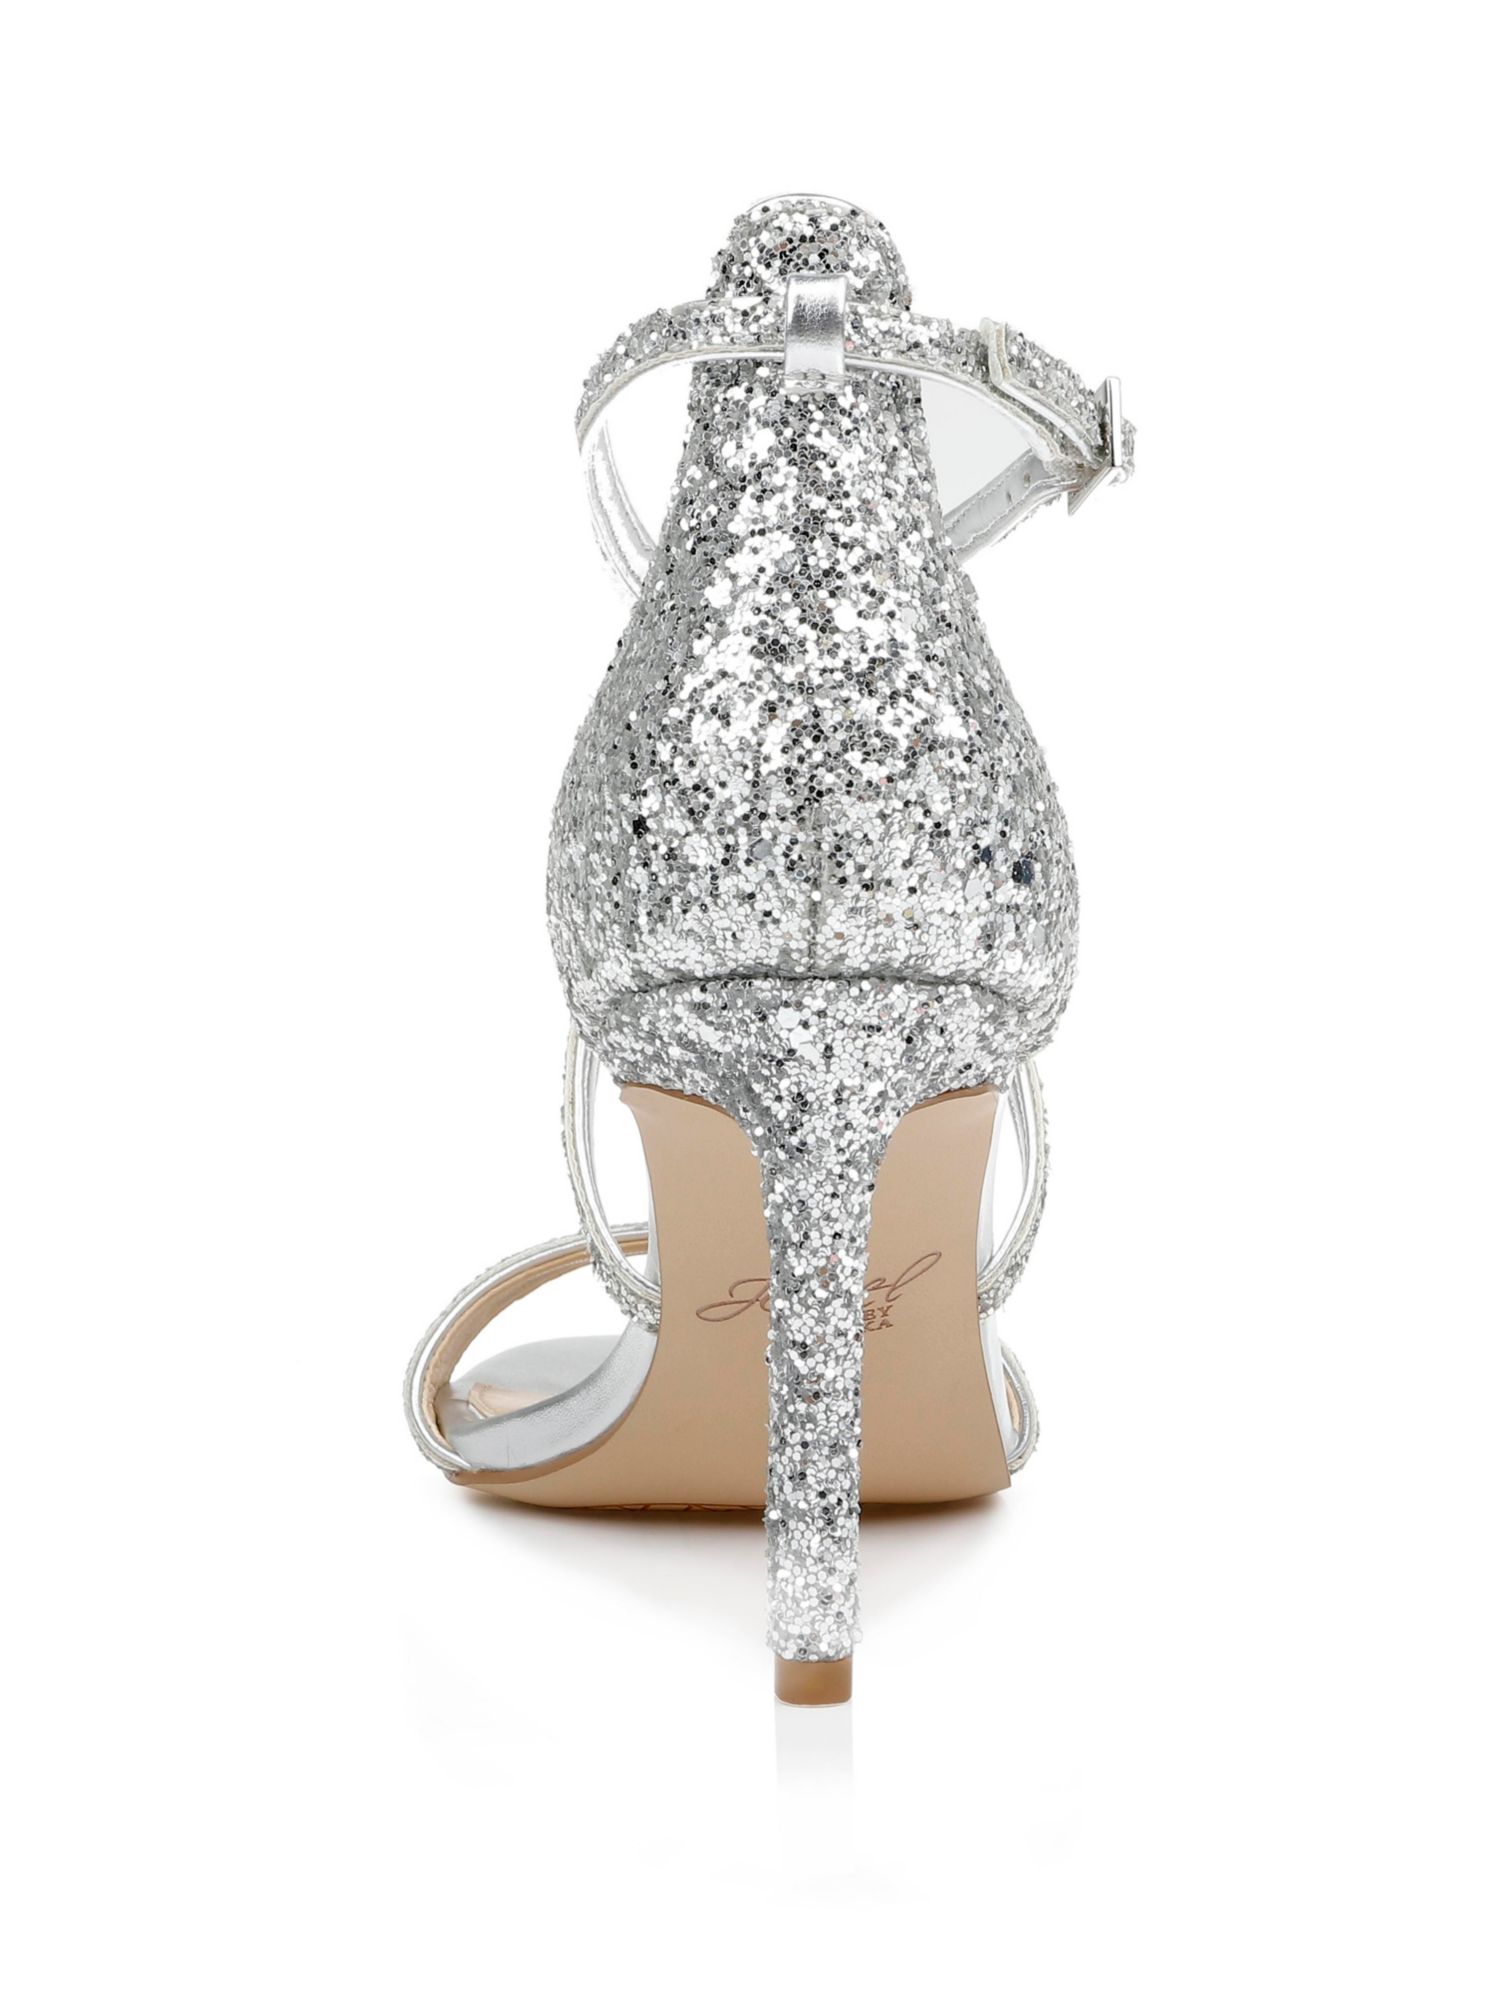 JEWEL BADGLEY MISCHKA Womens Silver Strappy Dimitra Round Toe Stiletto Buckle Dress Heeled Sandal 9 M